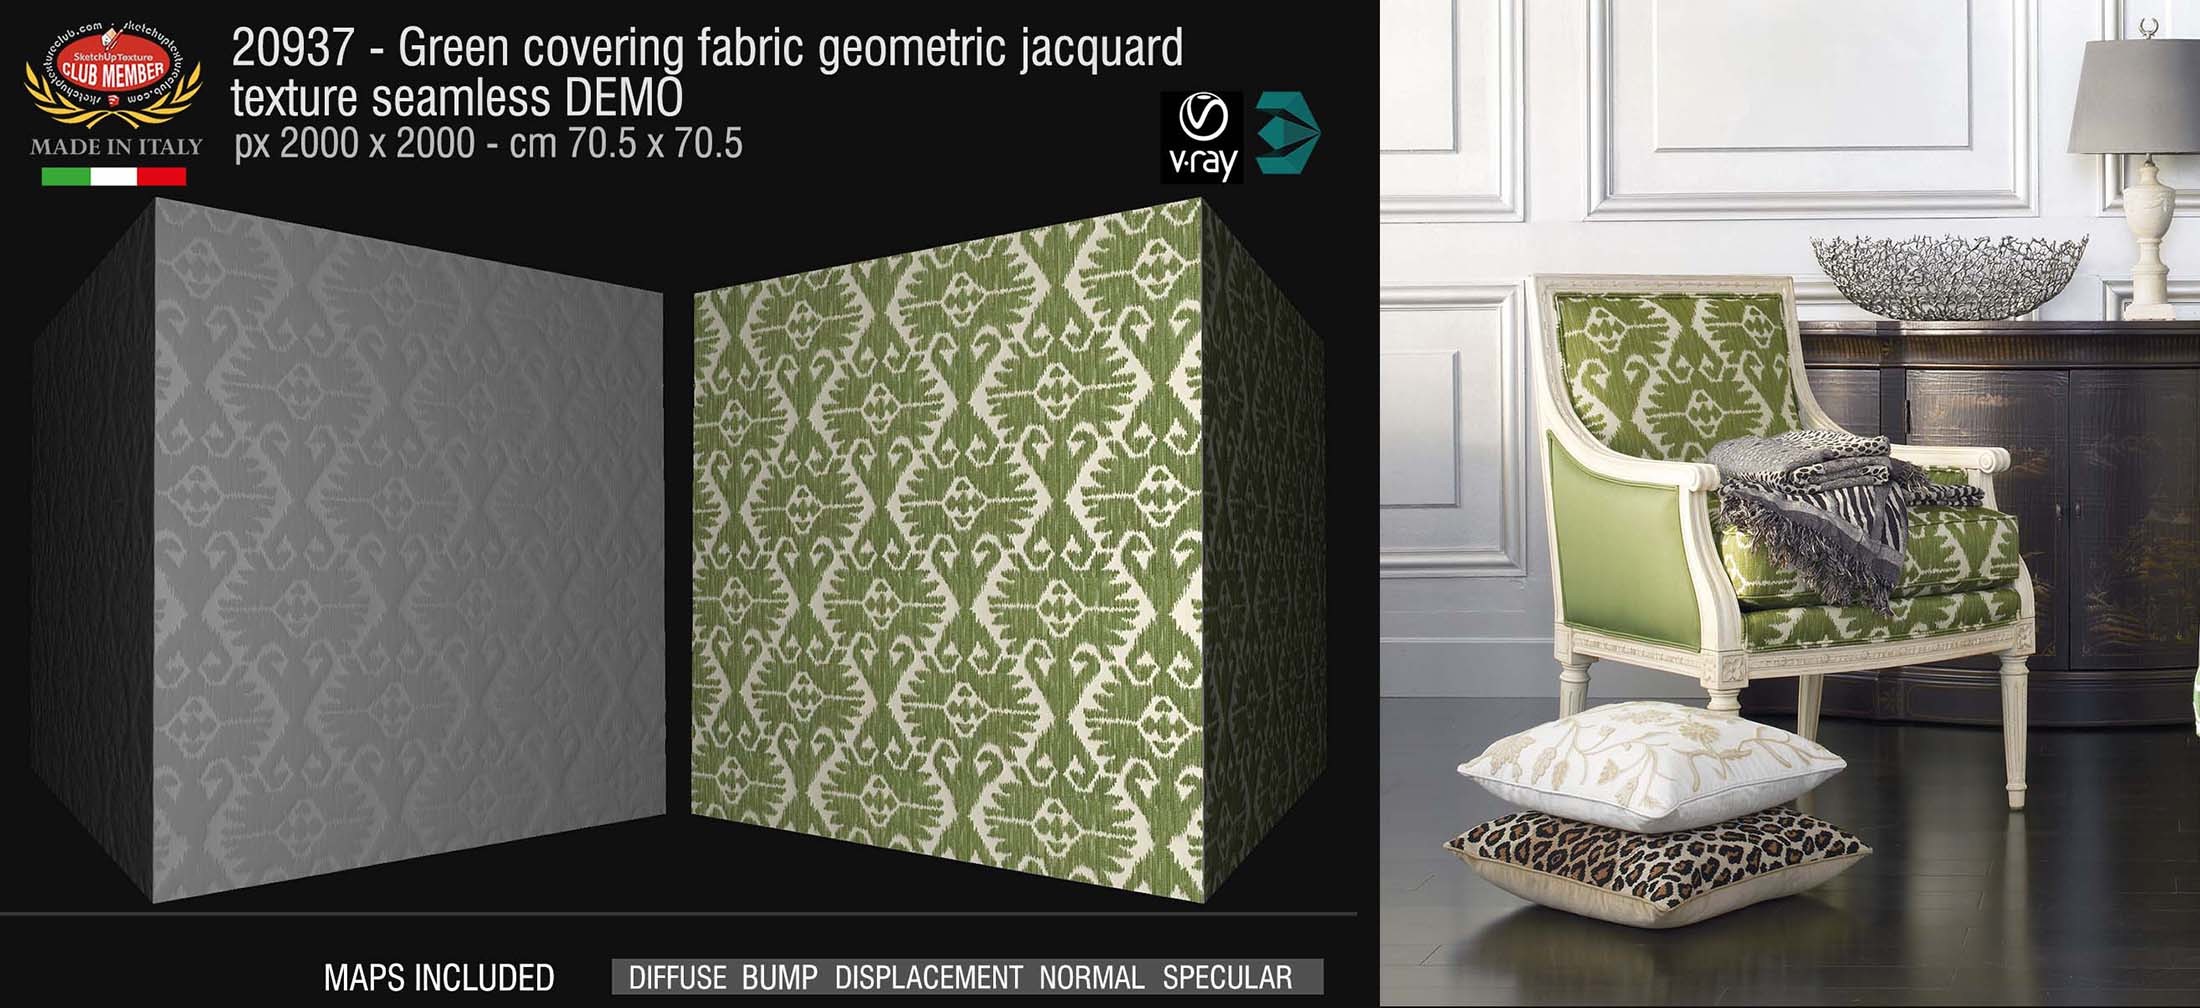 20937 Green covering fabric geometric jacquard texture + maps DEMO